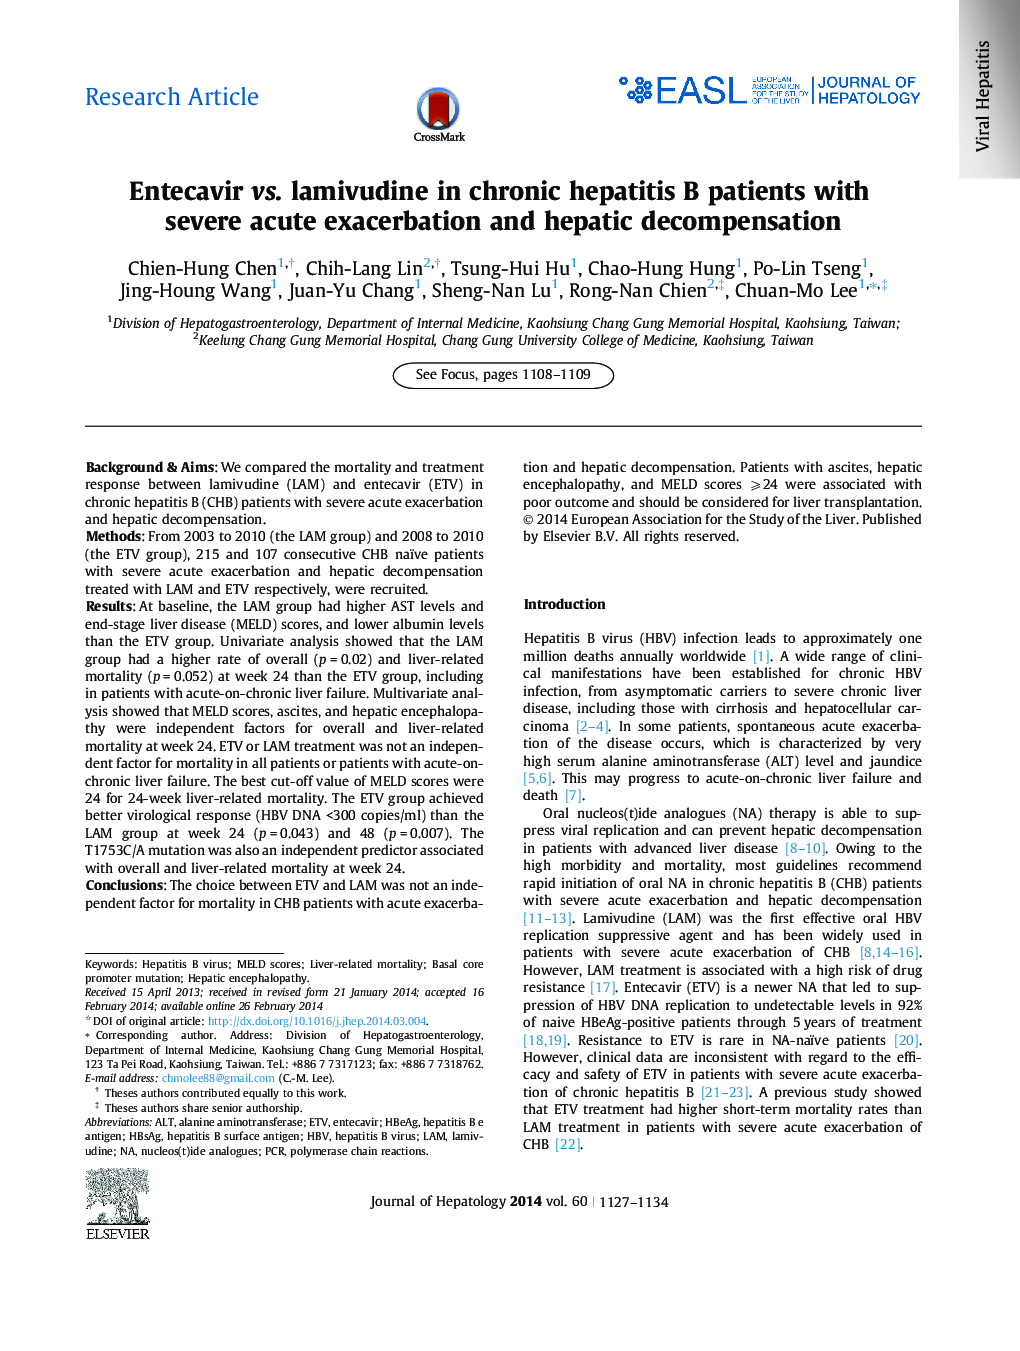 Research ArticleEntecavir vs. lamivudine in chronic hepatitis B patients with severe acute exacerbation and hepatic decompensation